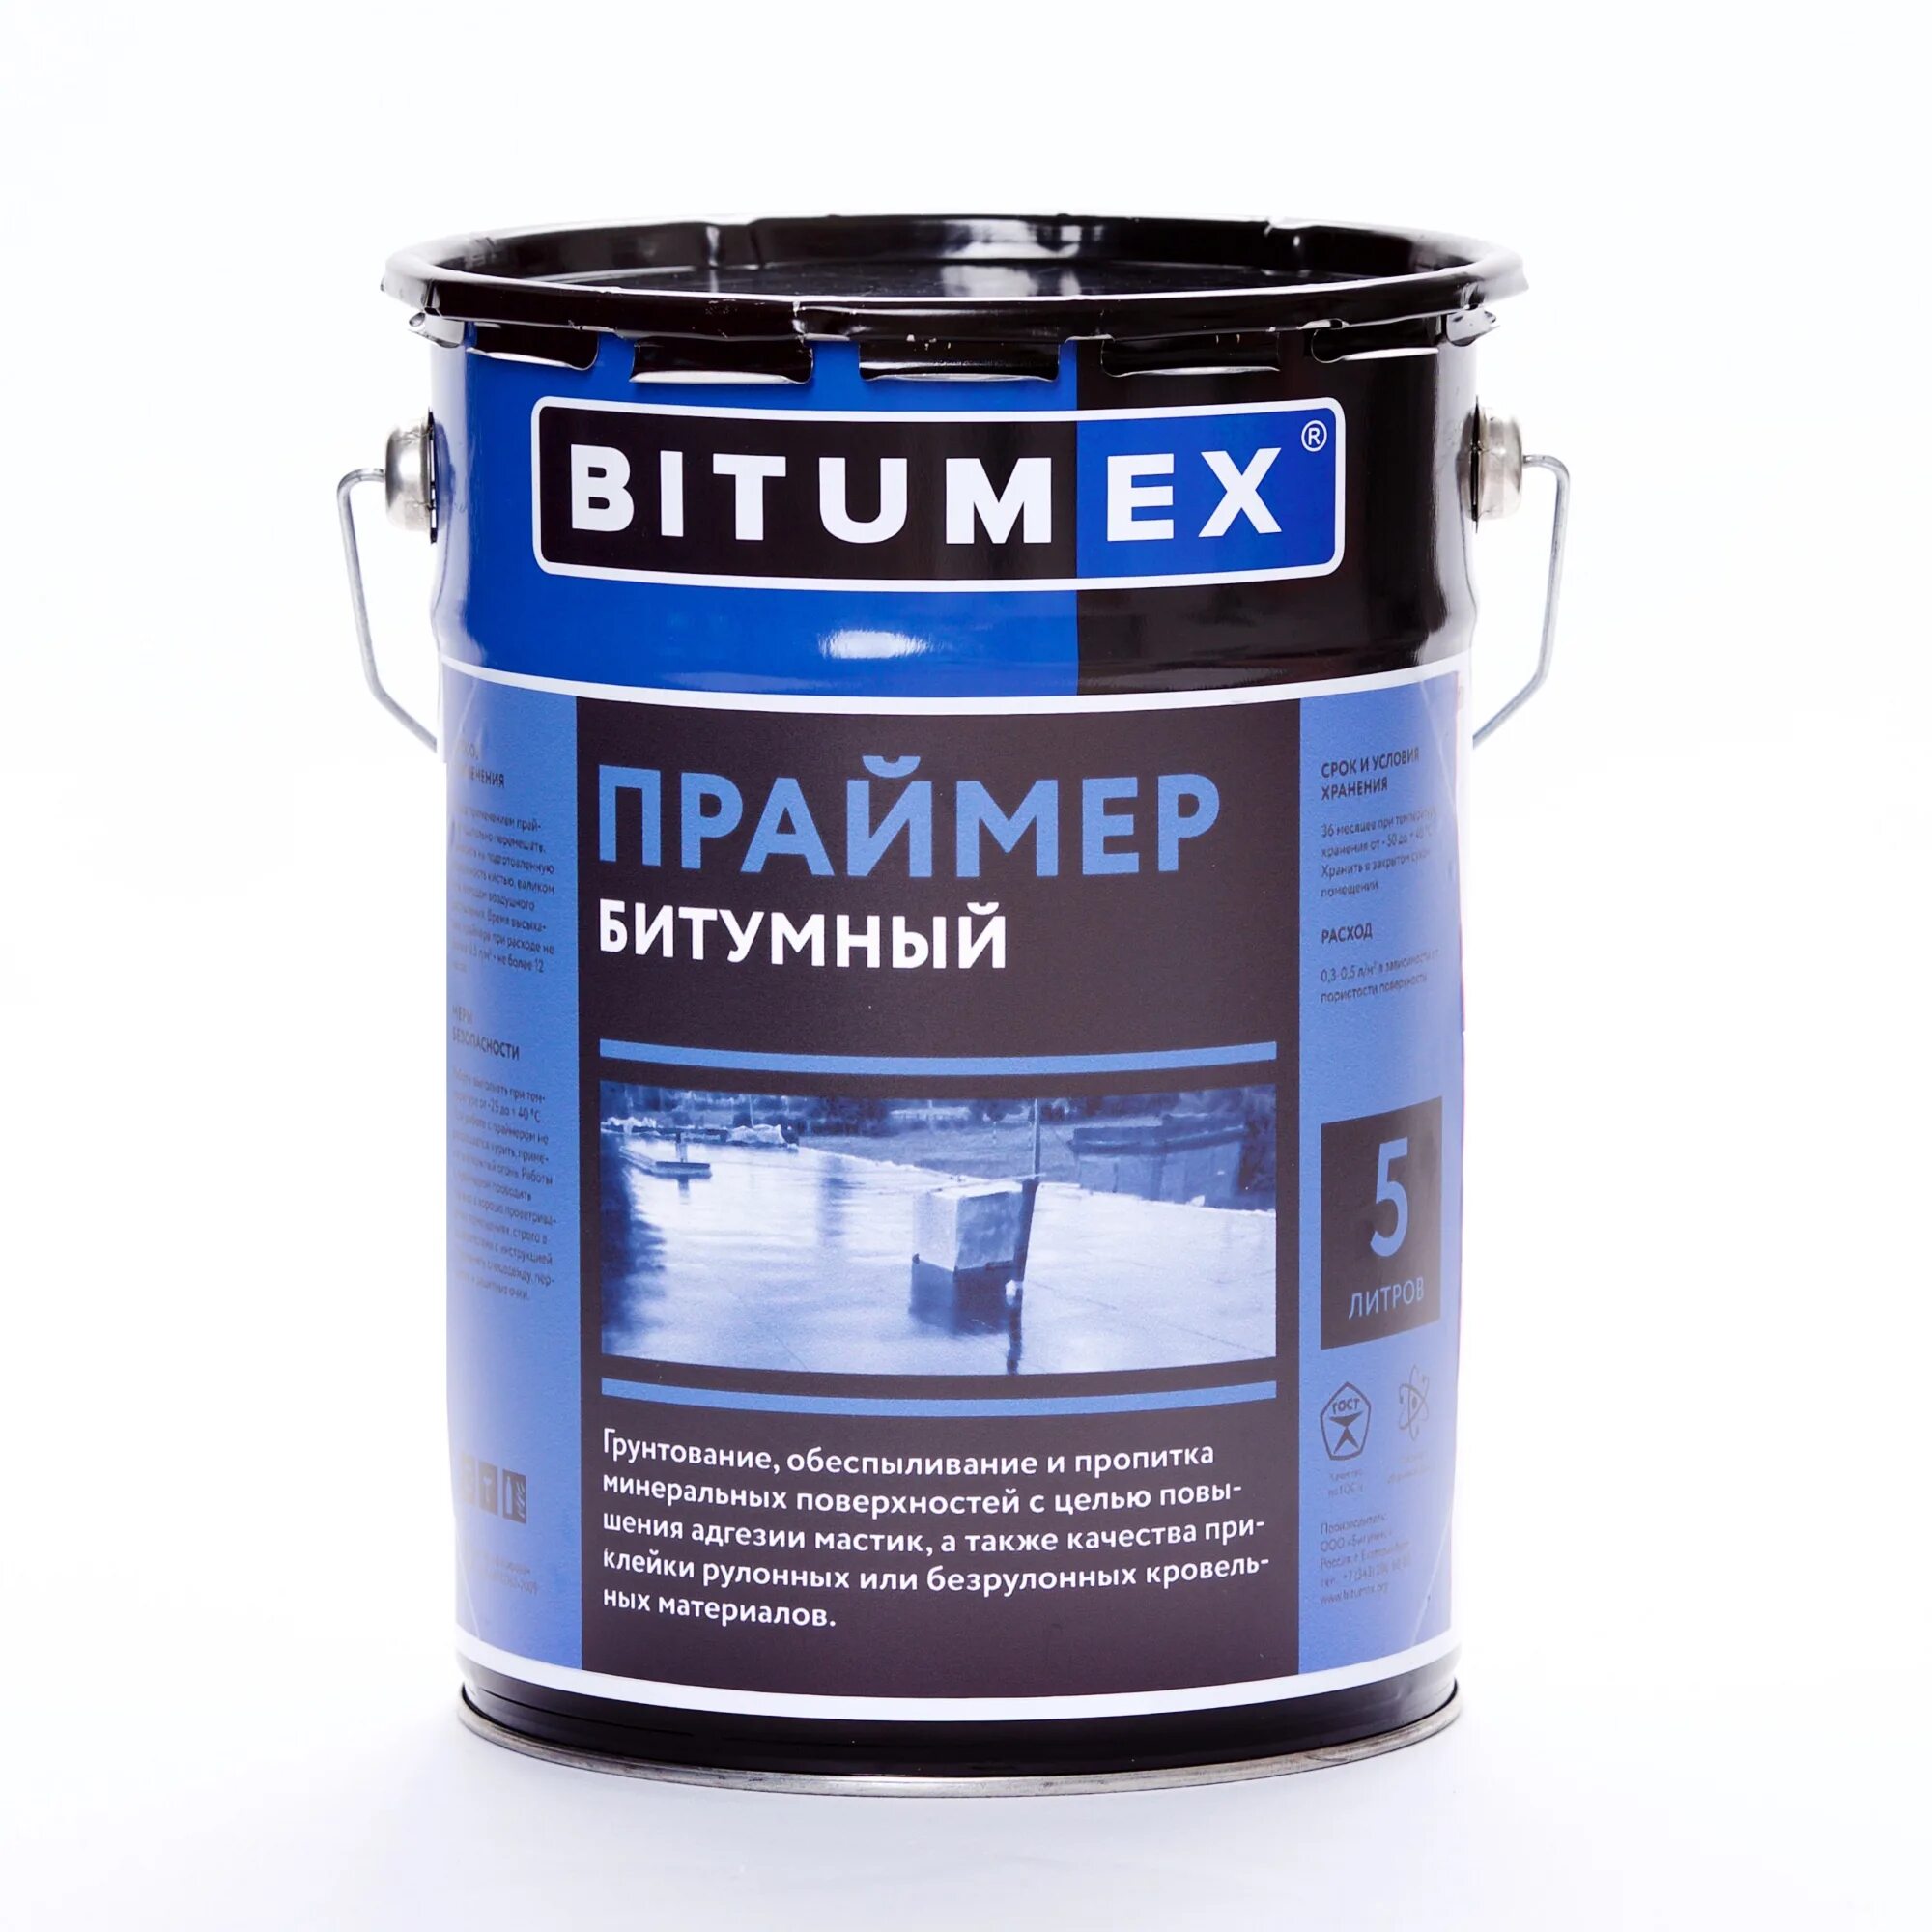 Праймер BITUMEX битумный 5л. Праймер битумный BITUMEX эконом, 21,5л. Мастика битумная гидроизоляционная BITUMEX эконом, 22кг. Праймер битумный SMARTMIX 5л.. Мастика герметизирующая кг